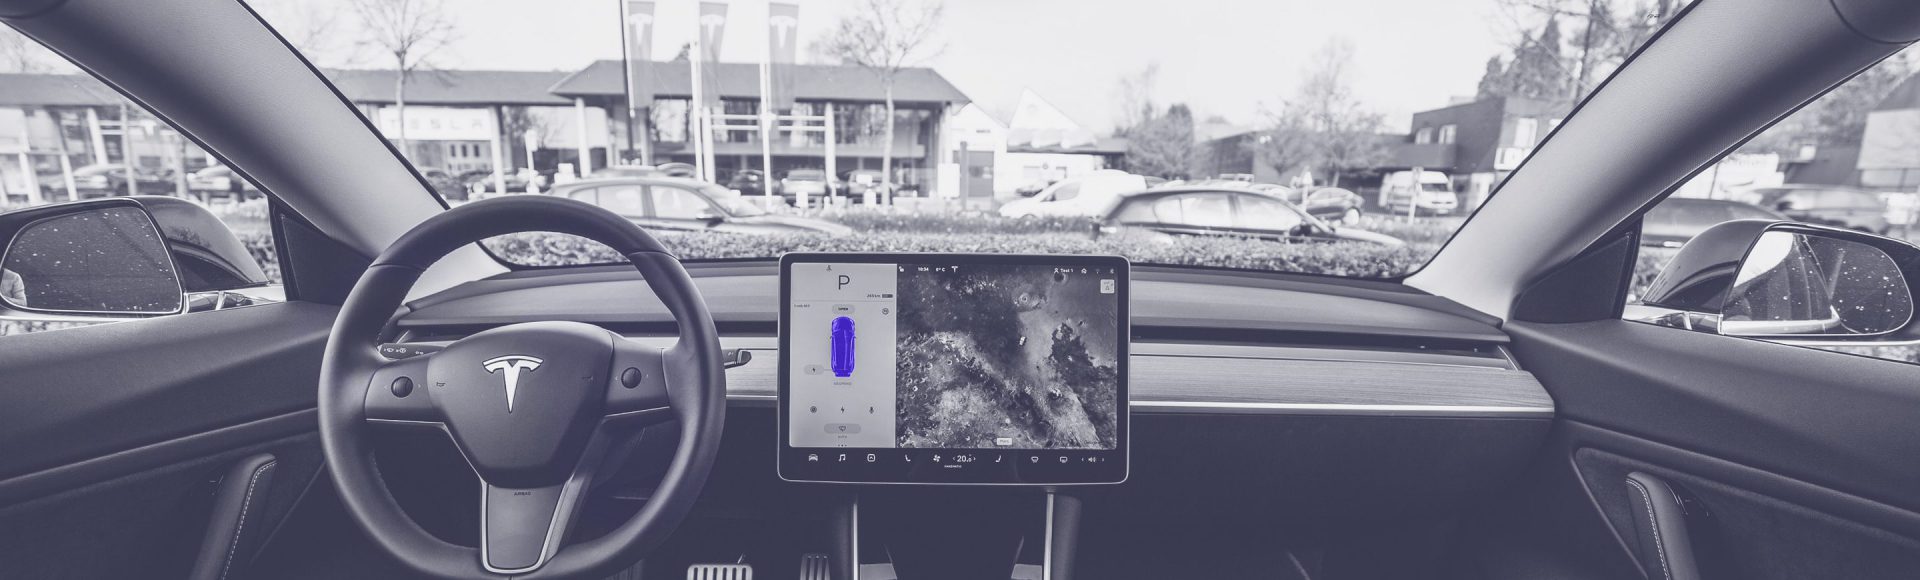 Tesla, Ridehailing, Autonomous